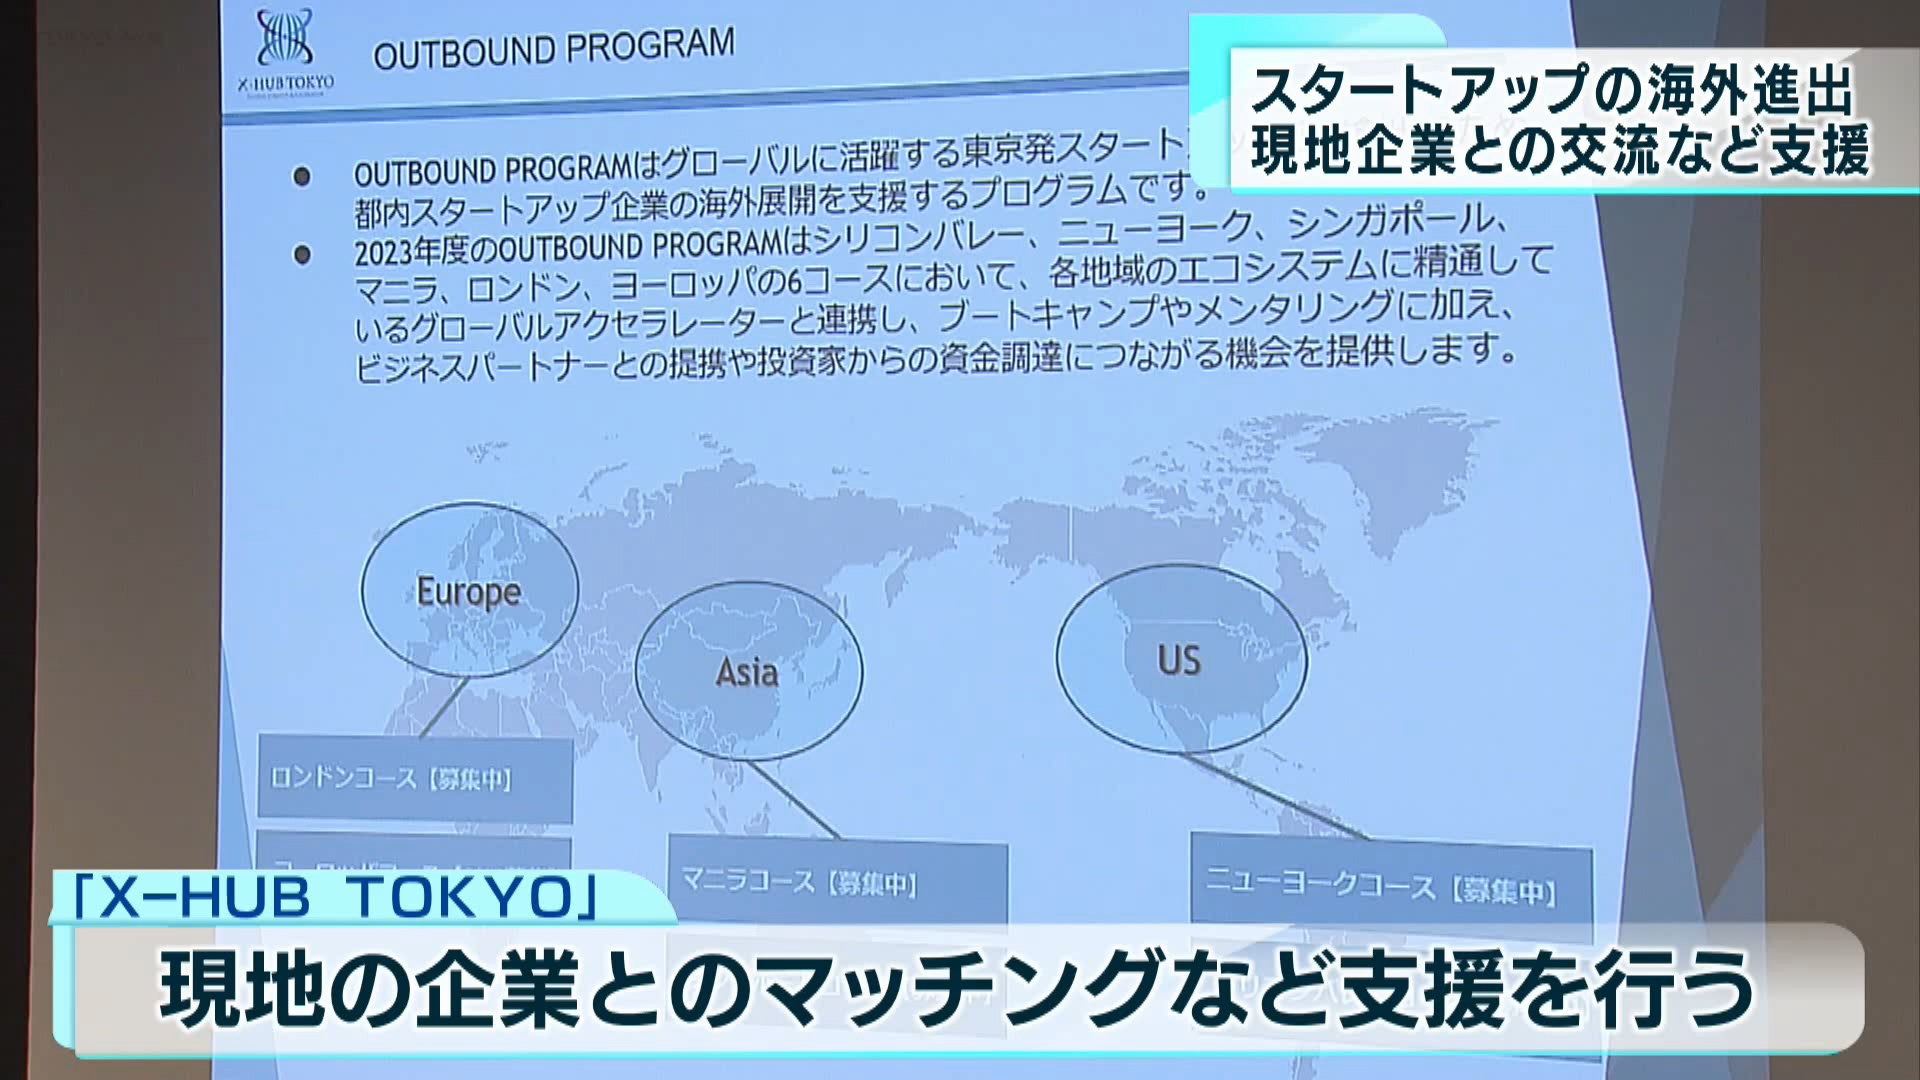 「X-HUB TOKYO」が後押し スタートアップに海外企業との交流支援 